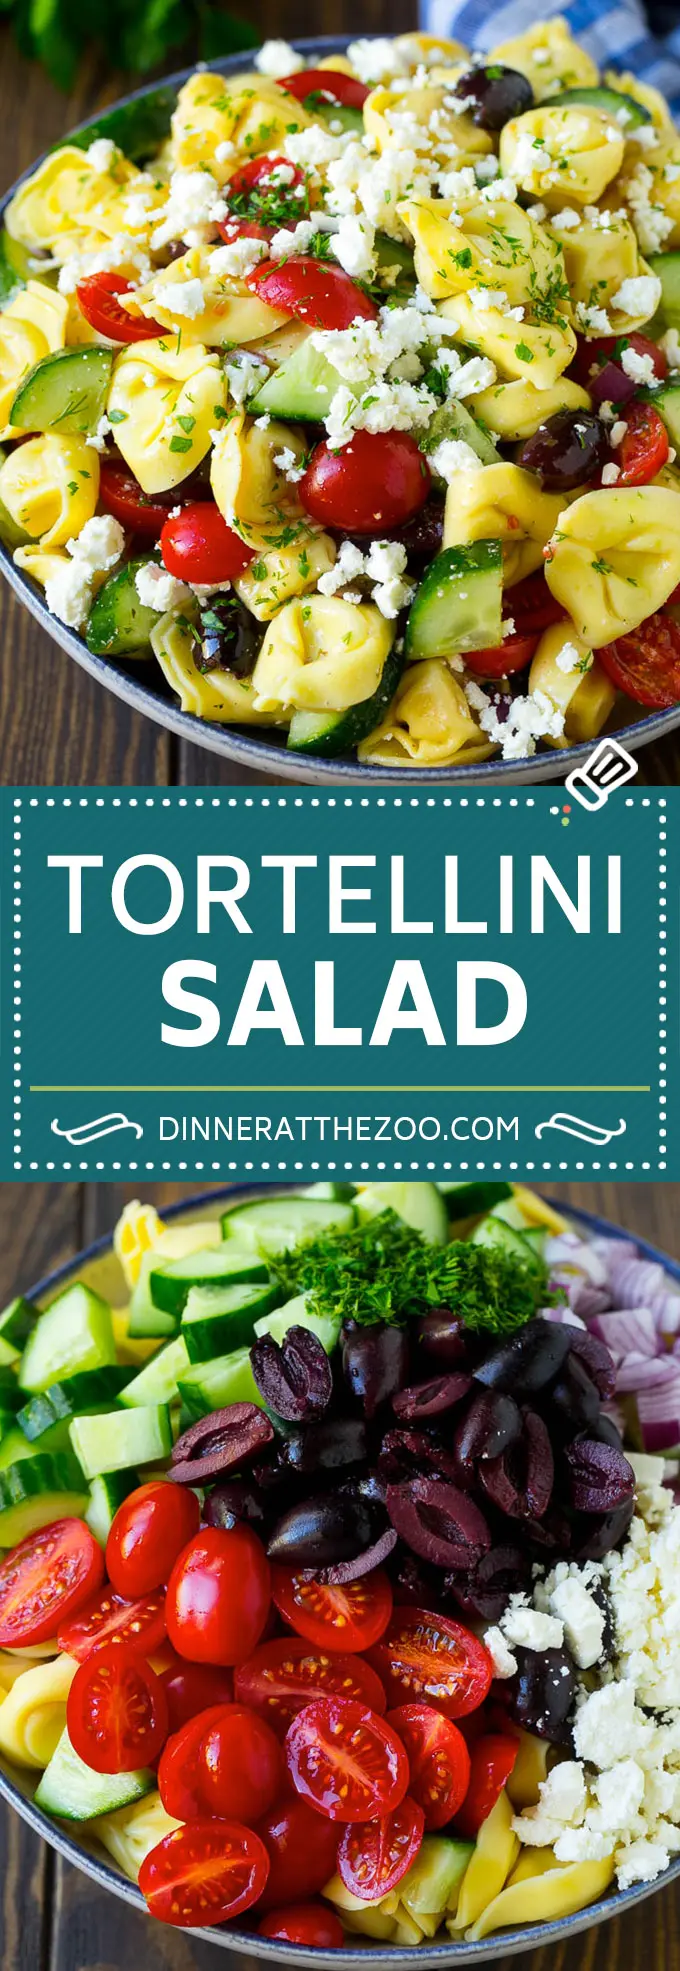 Griechischer Tortellini Salat Rezept | Nudelsalat | Tortellini Salat | Griechischer Salat #Griechisch #Tortellini #Pasta #Salat #Gurken #Oliven #Abendessen #dinneratthezoo